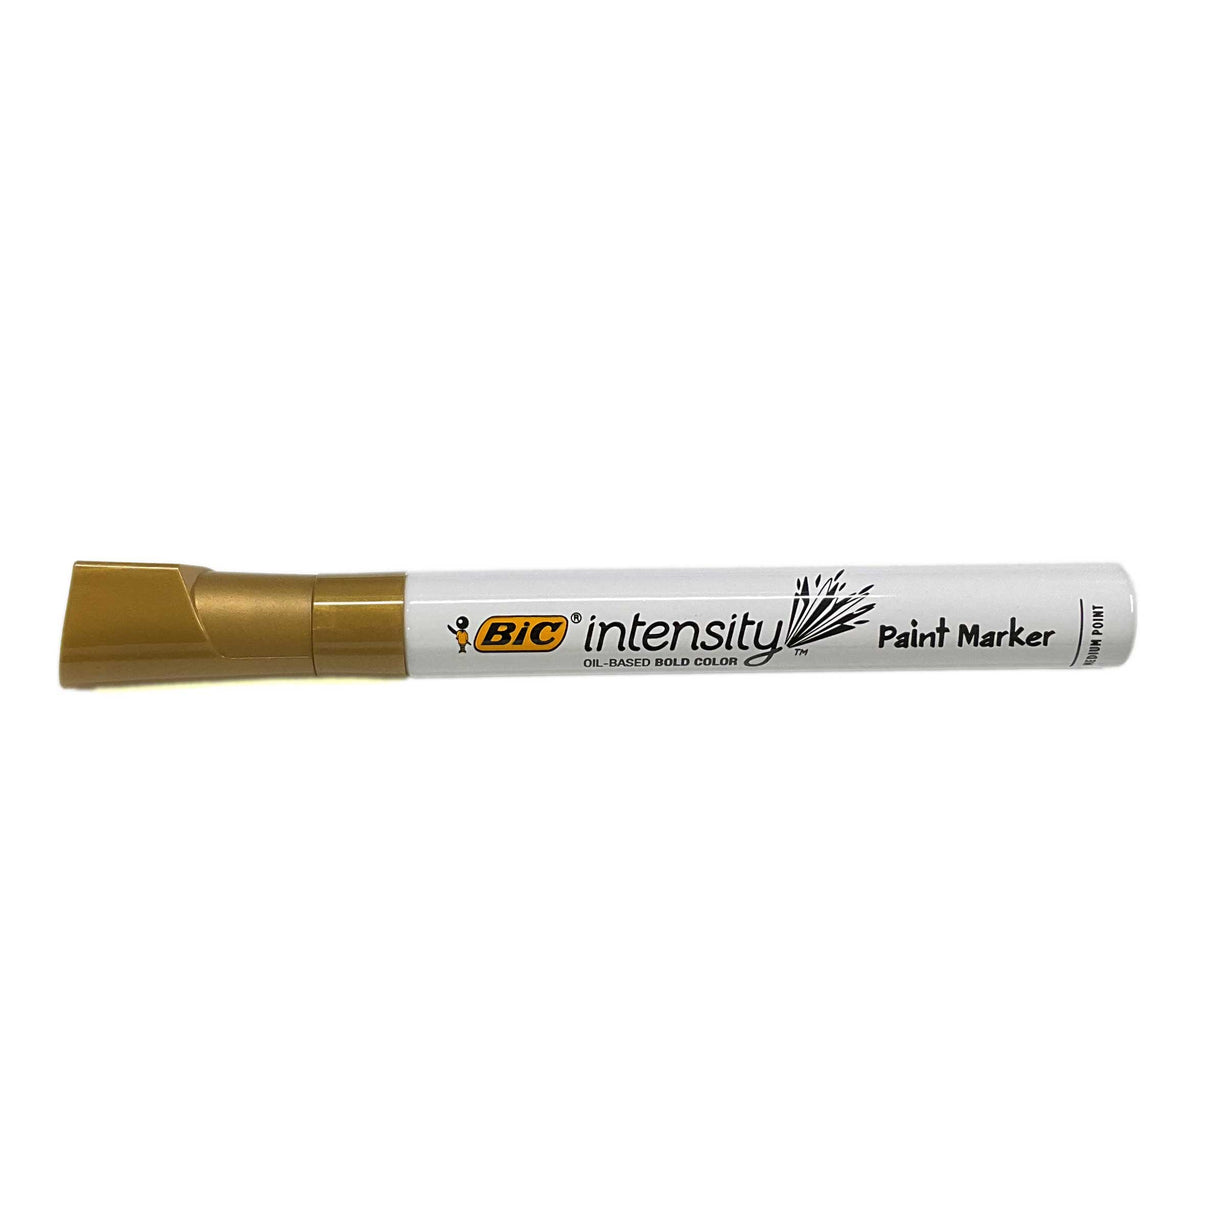 Gold Paint Marker, Bic Intensity, Oil Based